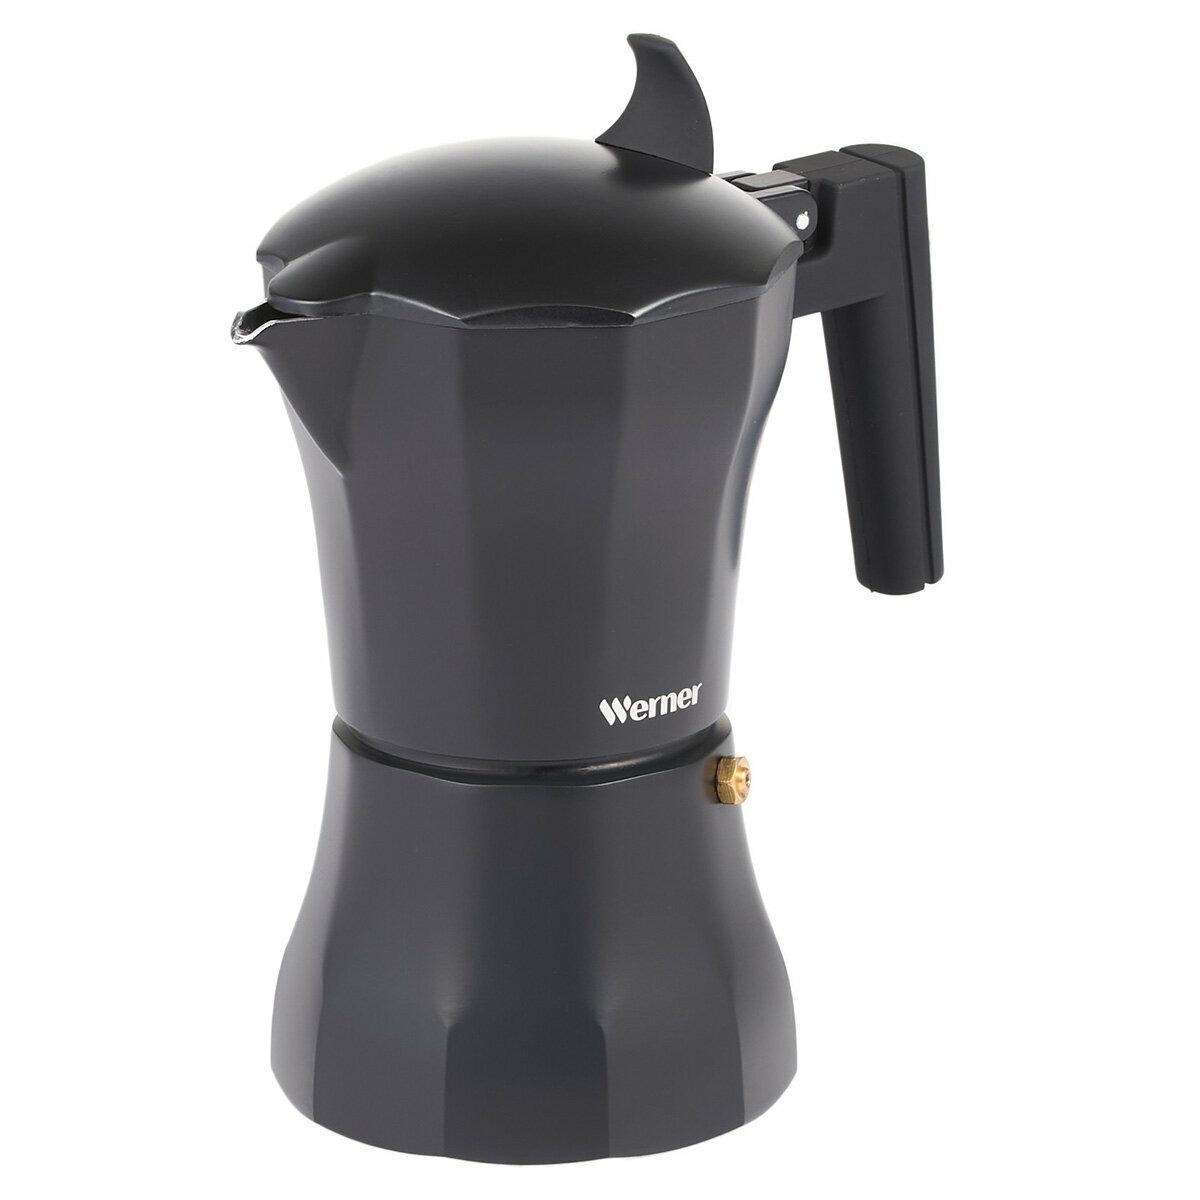 Гейзерная кофеварка Werner Infinity черная 300 мл кофеварка гейзерная italco induction на 6 чашек